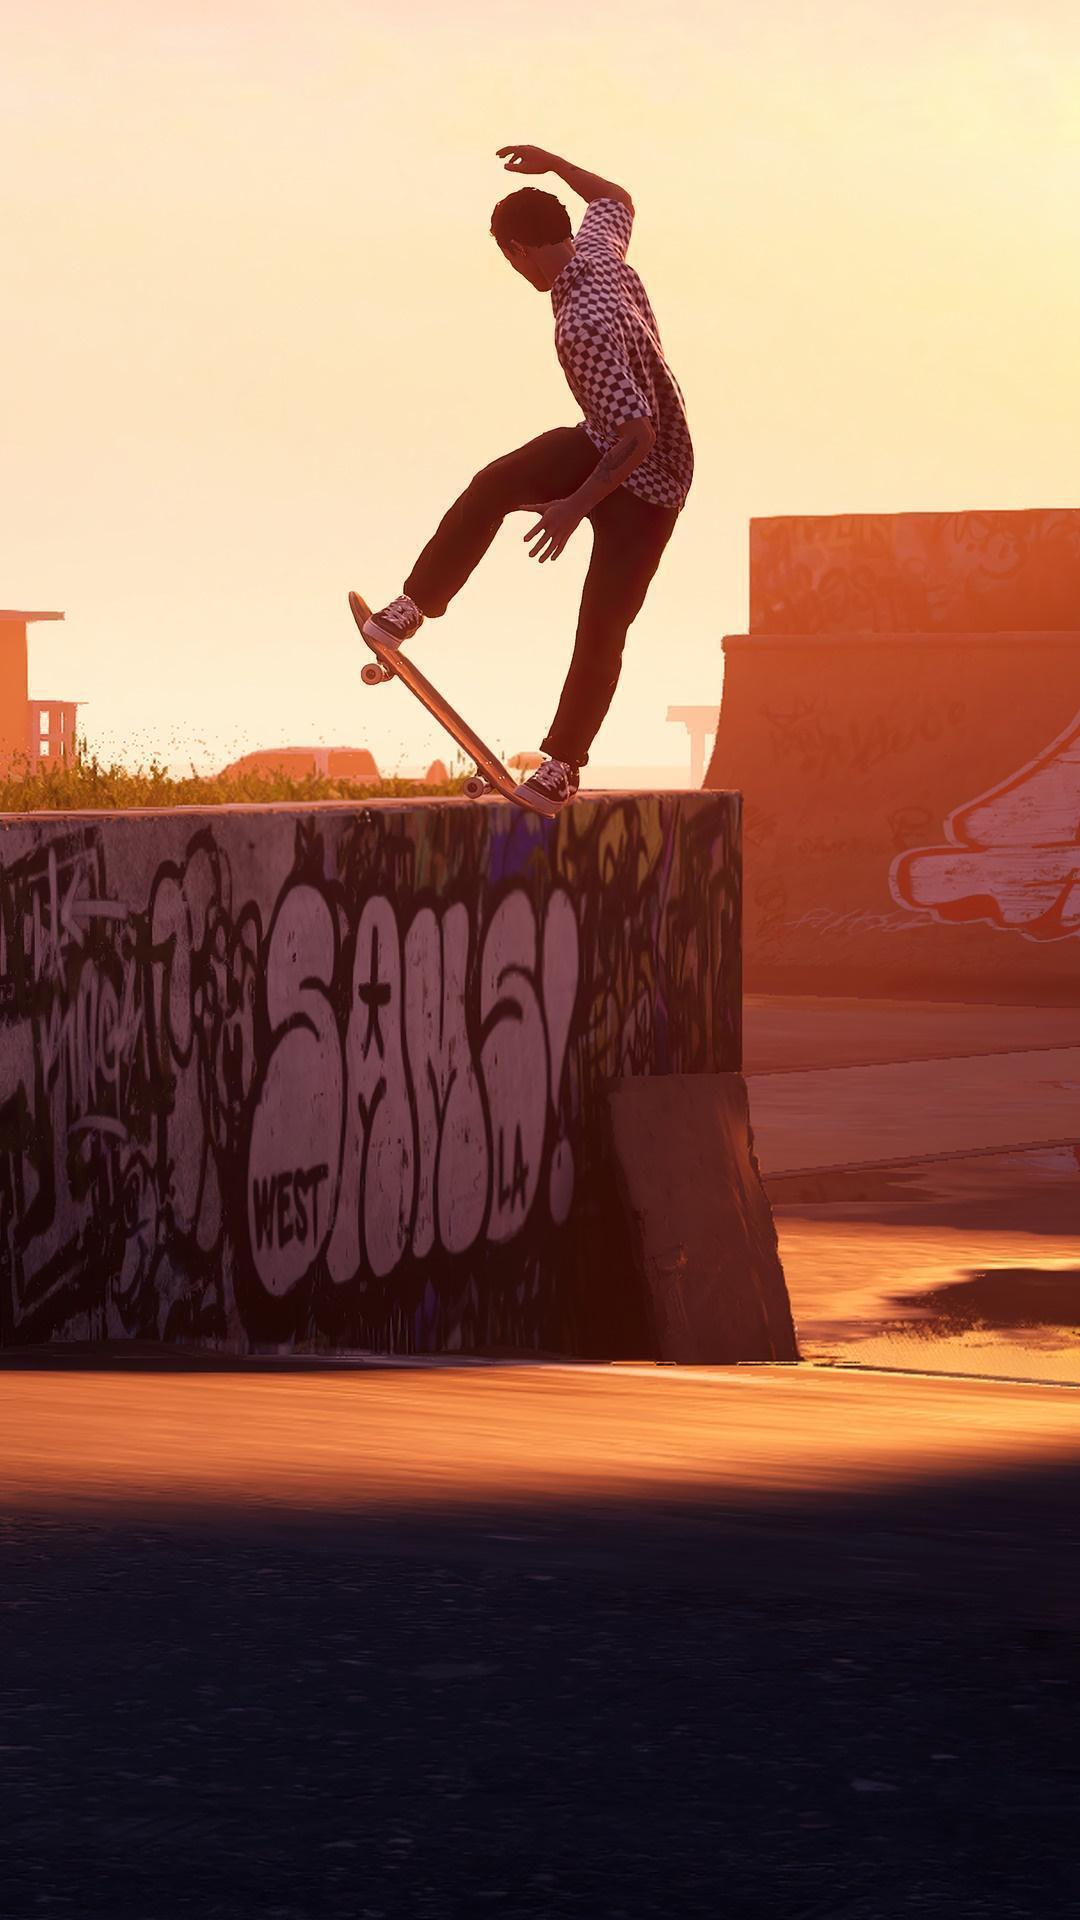 HD wallpaper, Video Game, Skateboarding, Skateboard